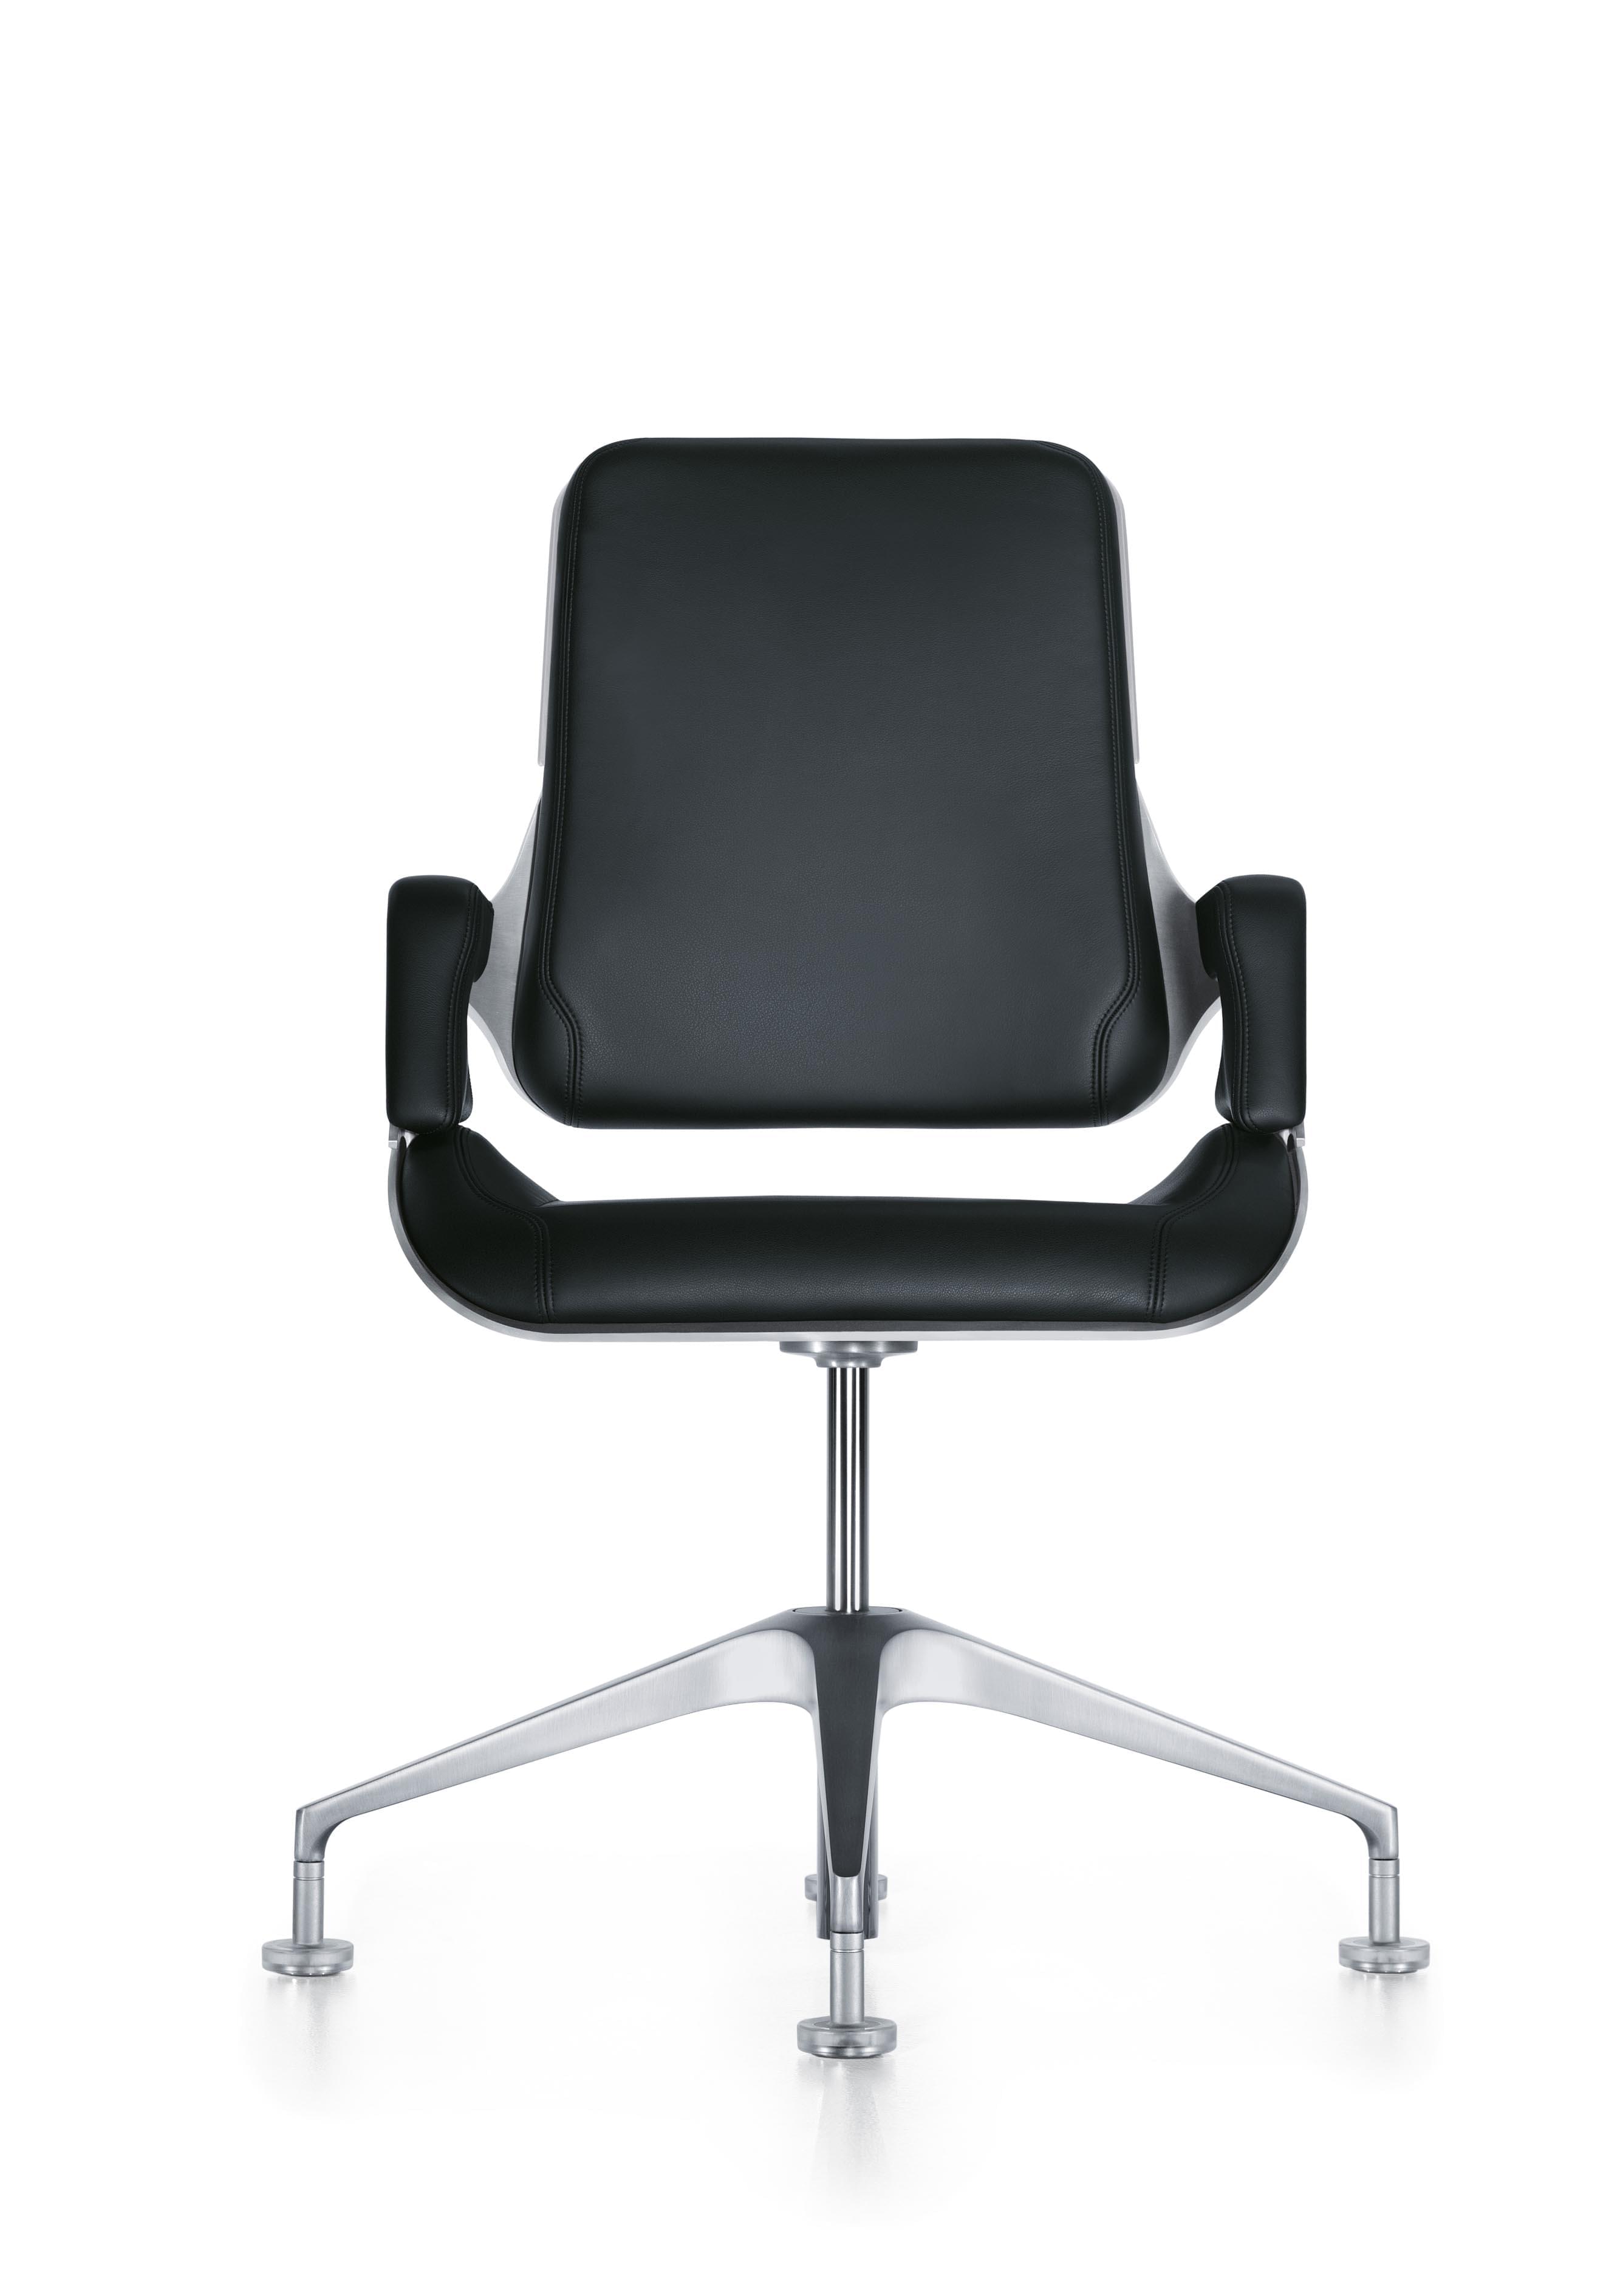 black seating on intershul desk chair